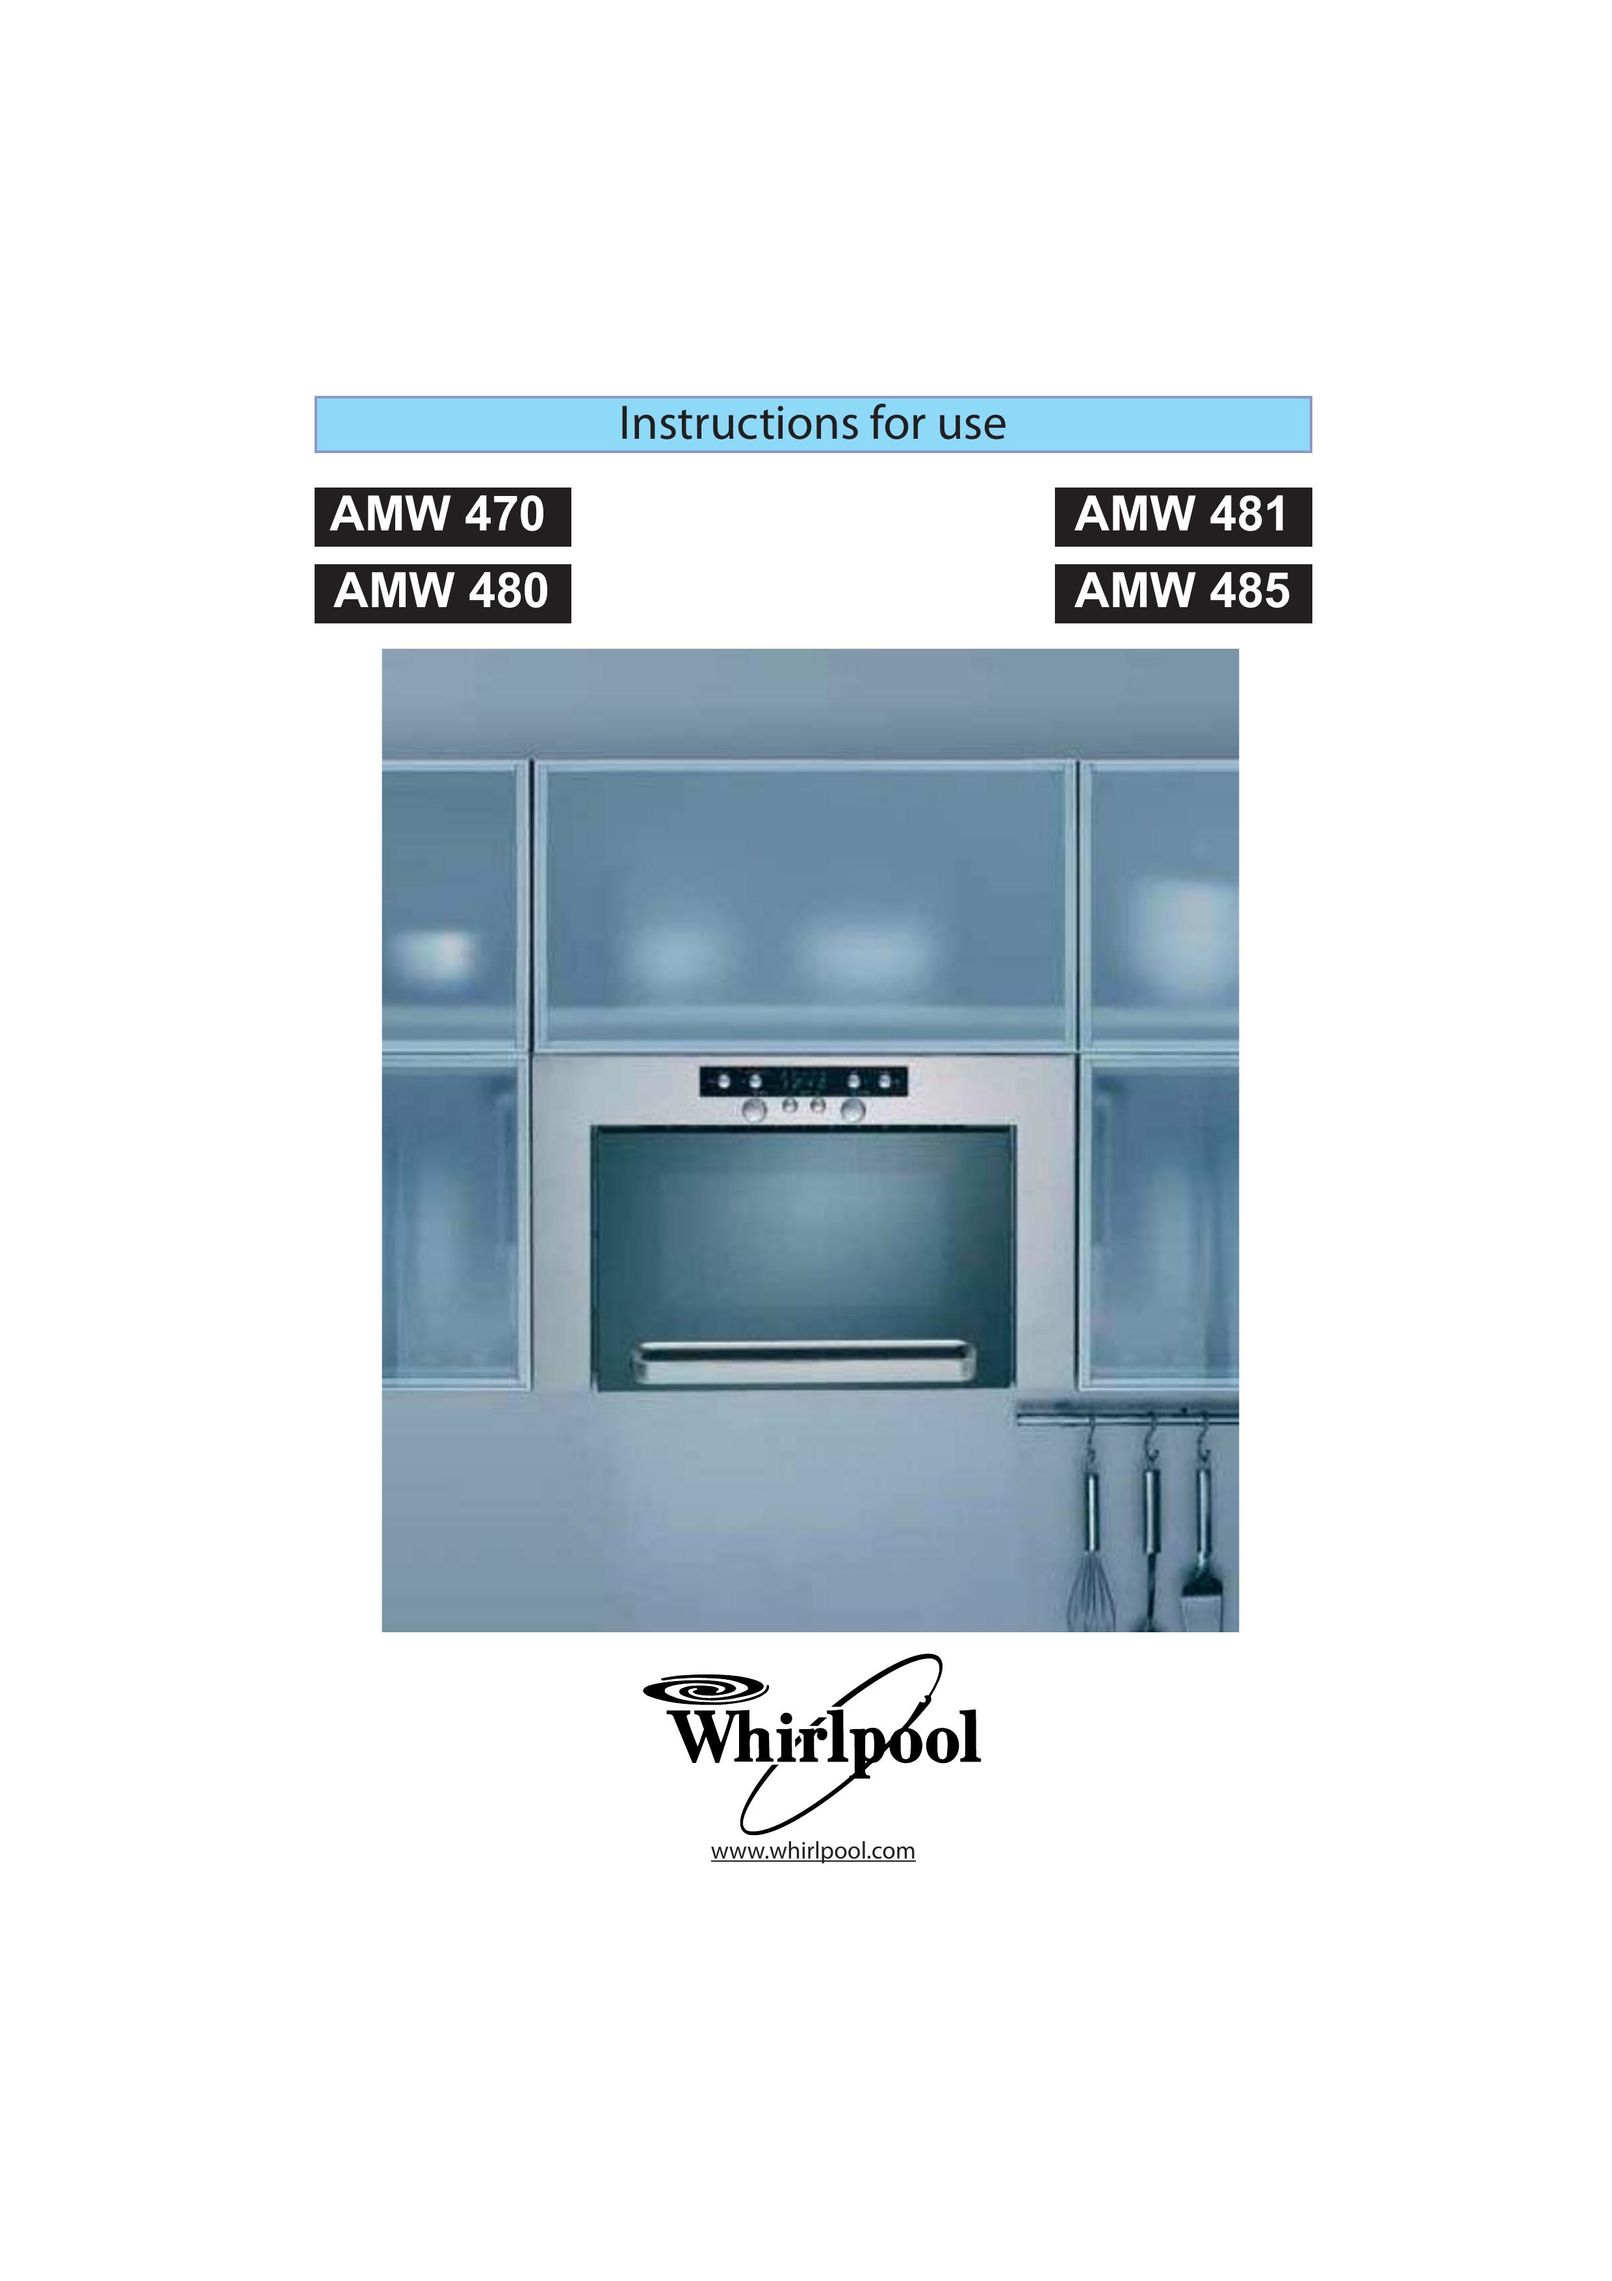 Whirlpool AMW 480 Microwave Oven User Manual